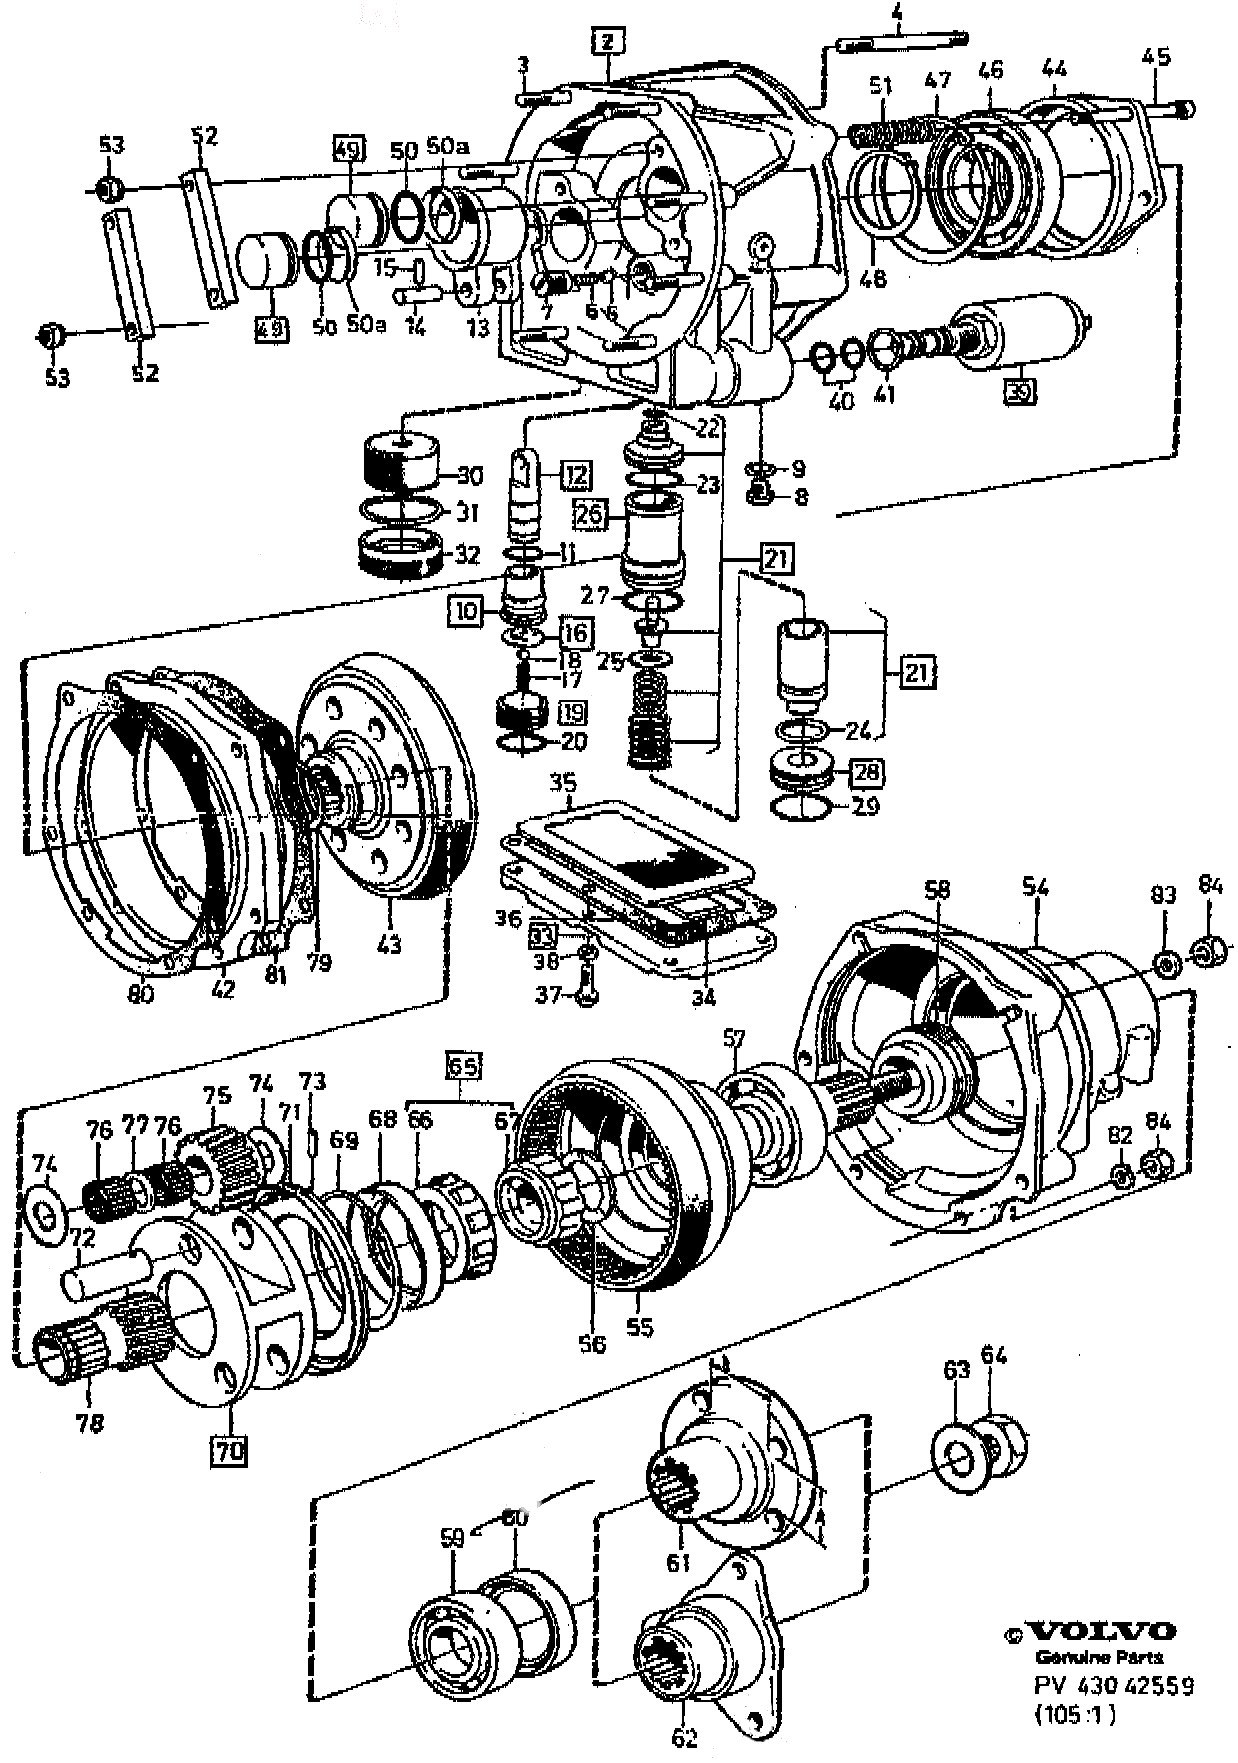 Engine Valve Parts Diagram Volvo Parts Schematic Wiring Diagram